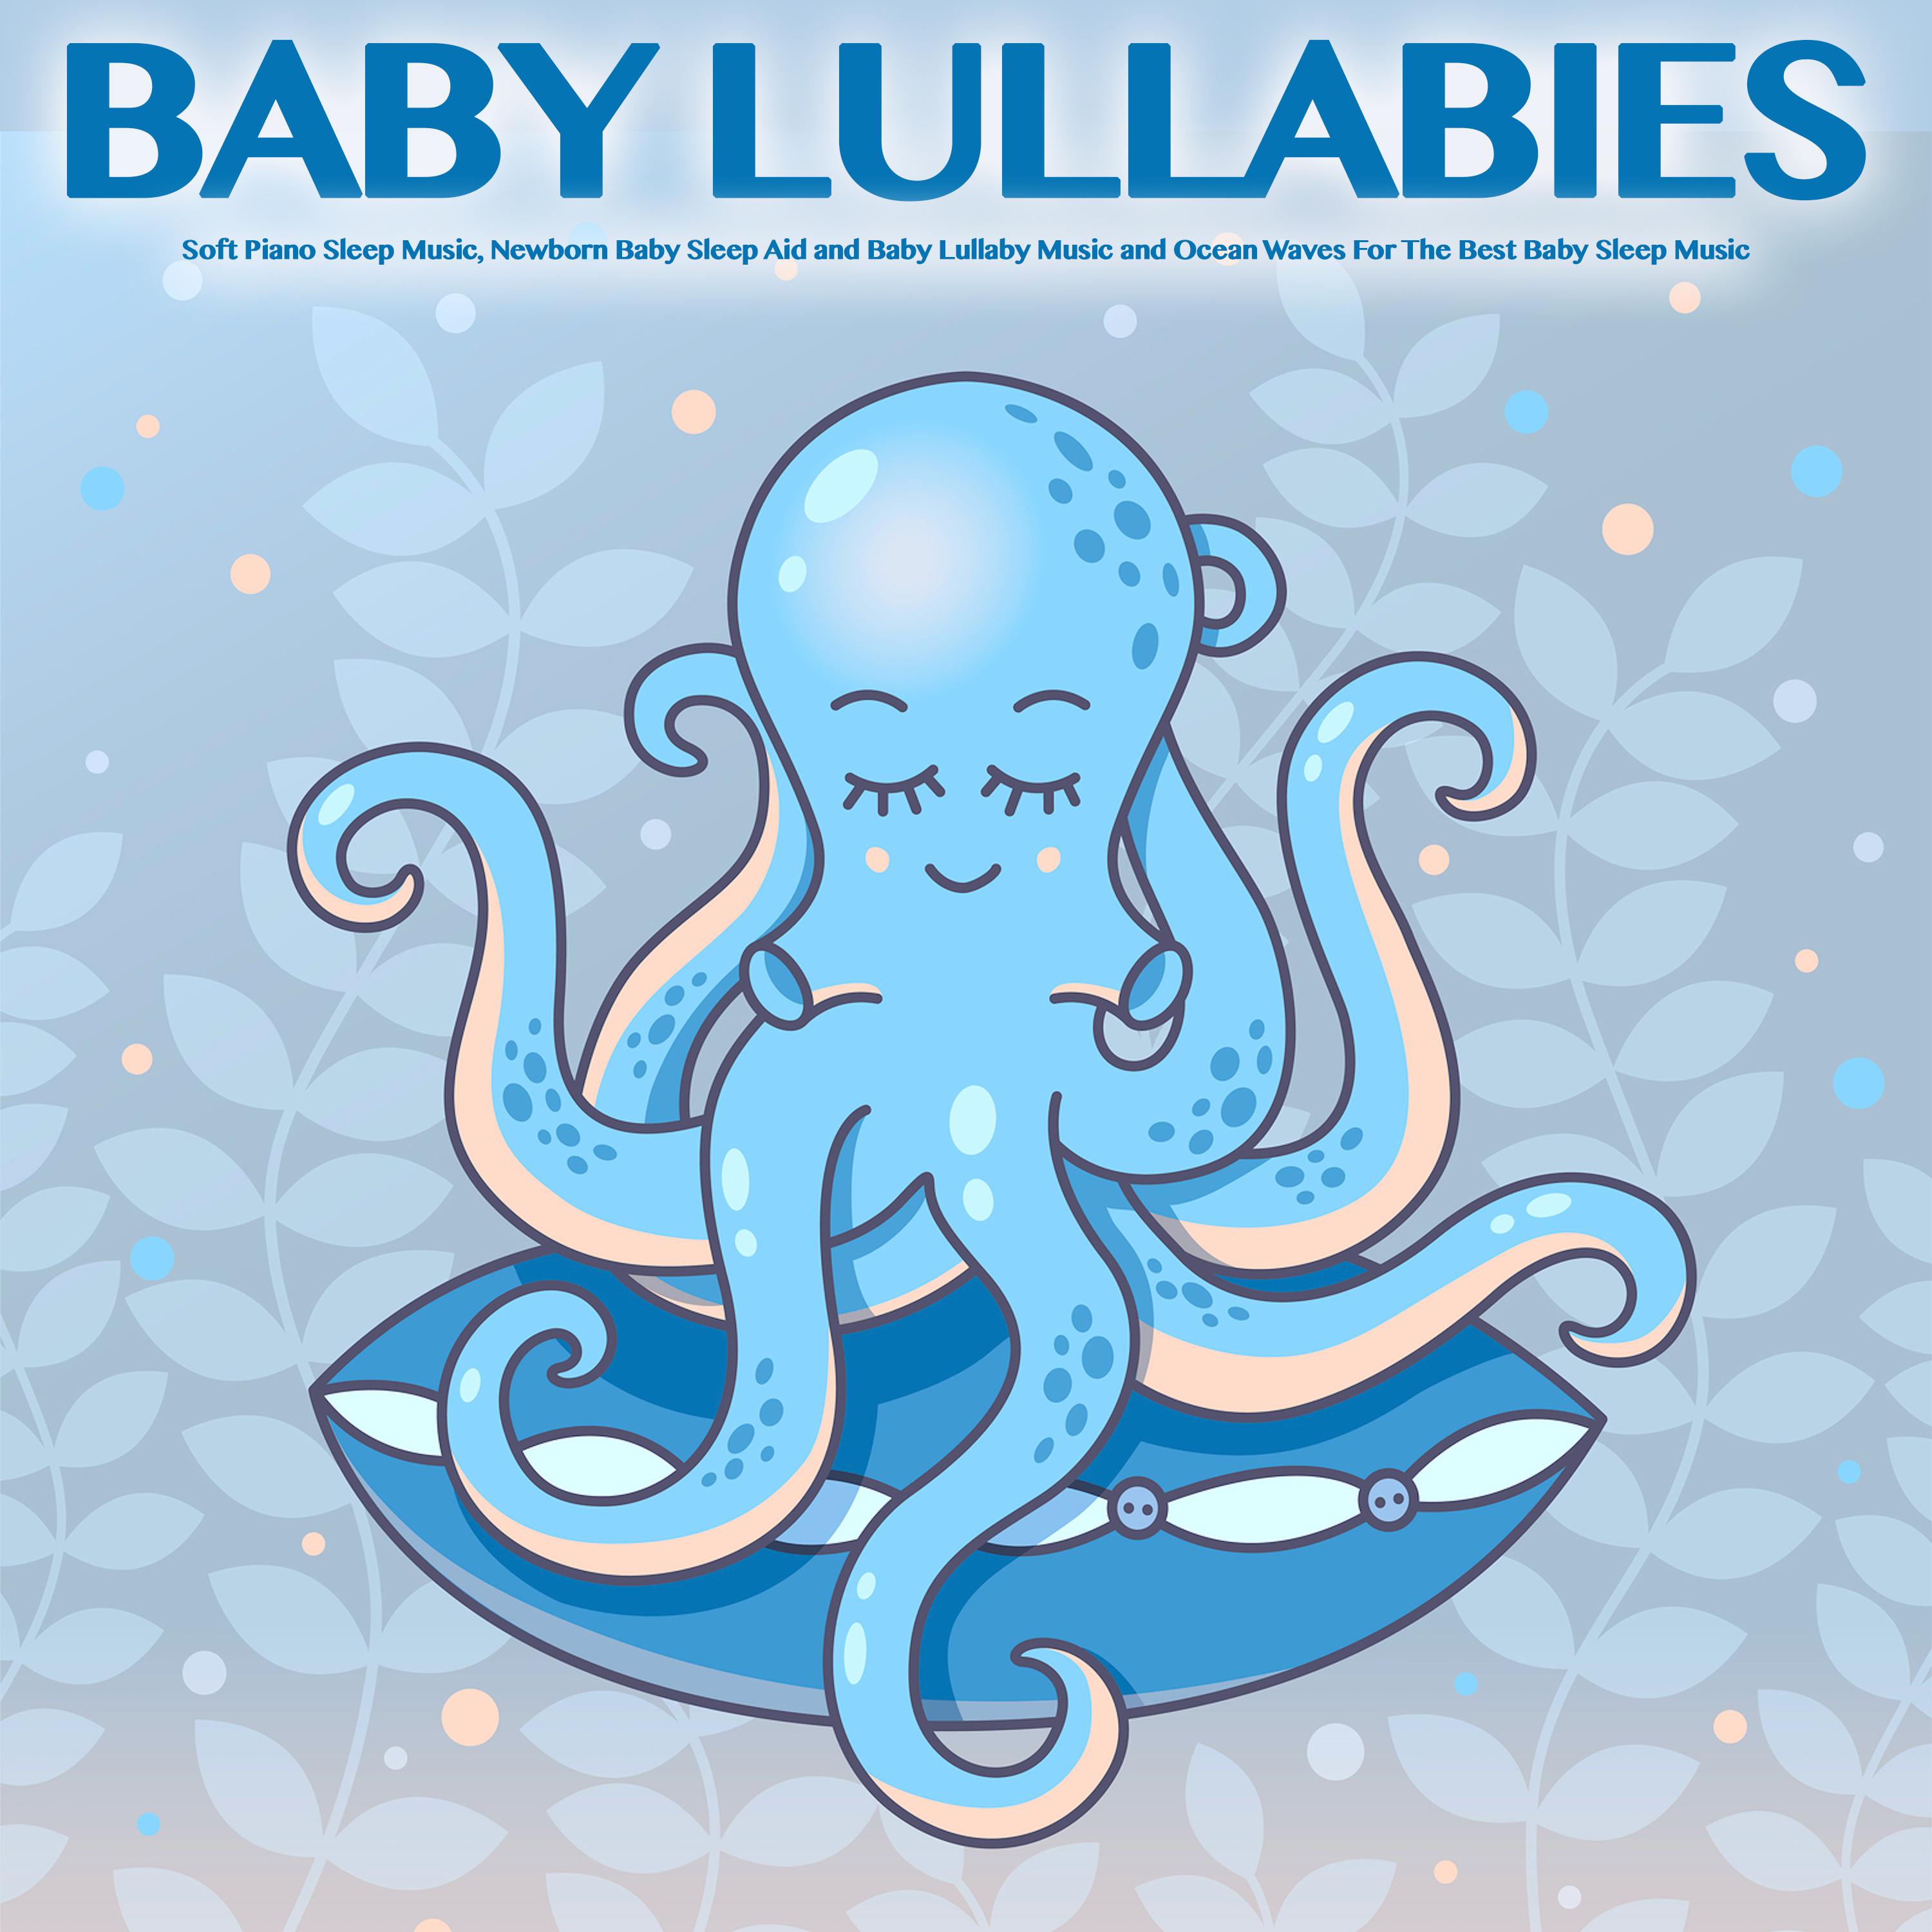 Baby Lullabies: Soft Piano Sleep Music, Newborn Baby Sleep Aid and Baby Lullaby Music and Ocean Waves For The Best Baby Sleep Music